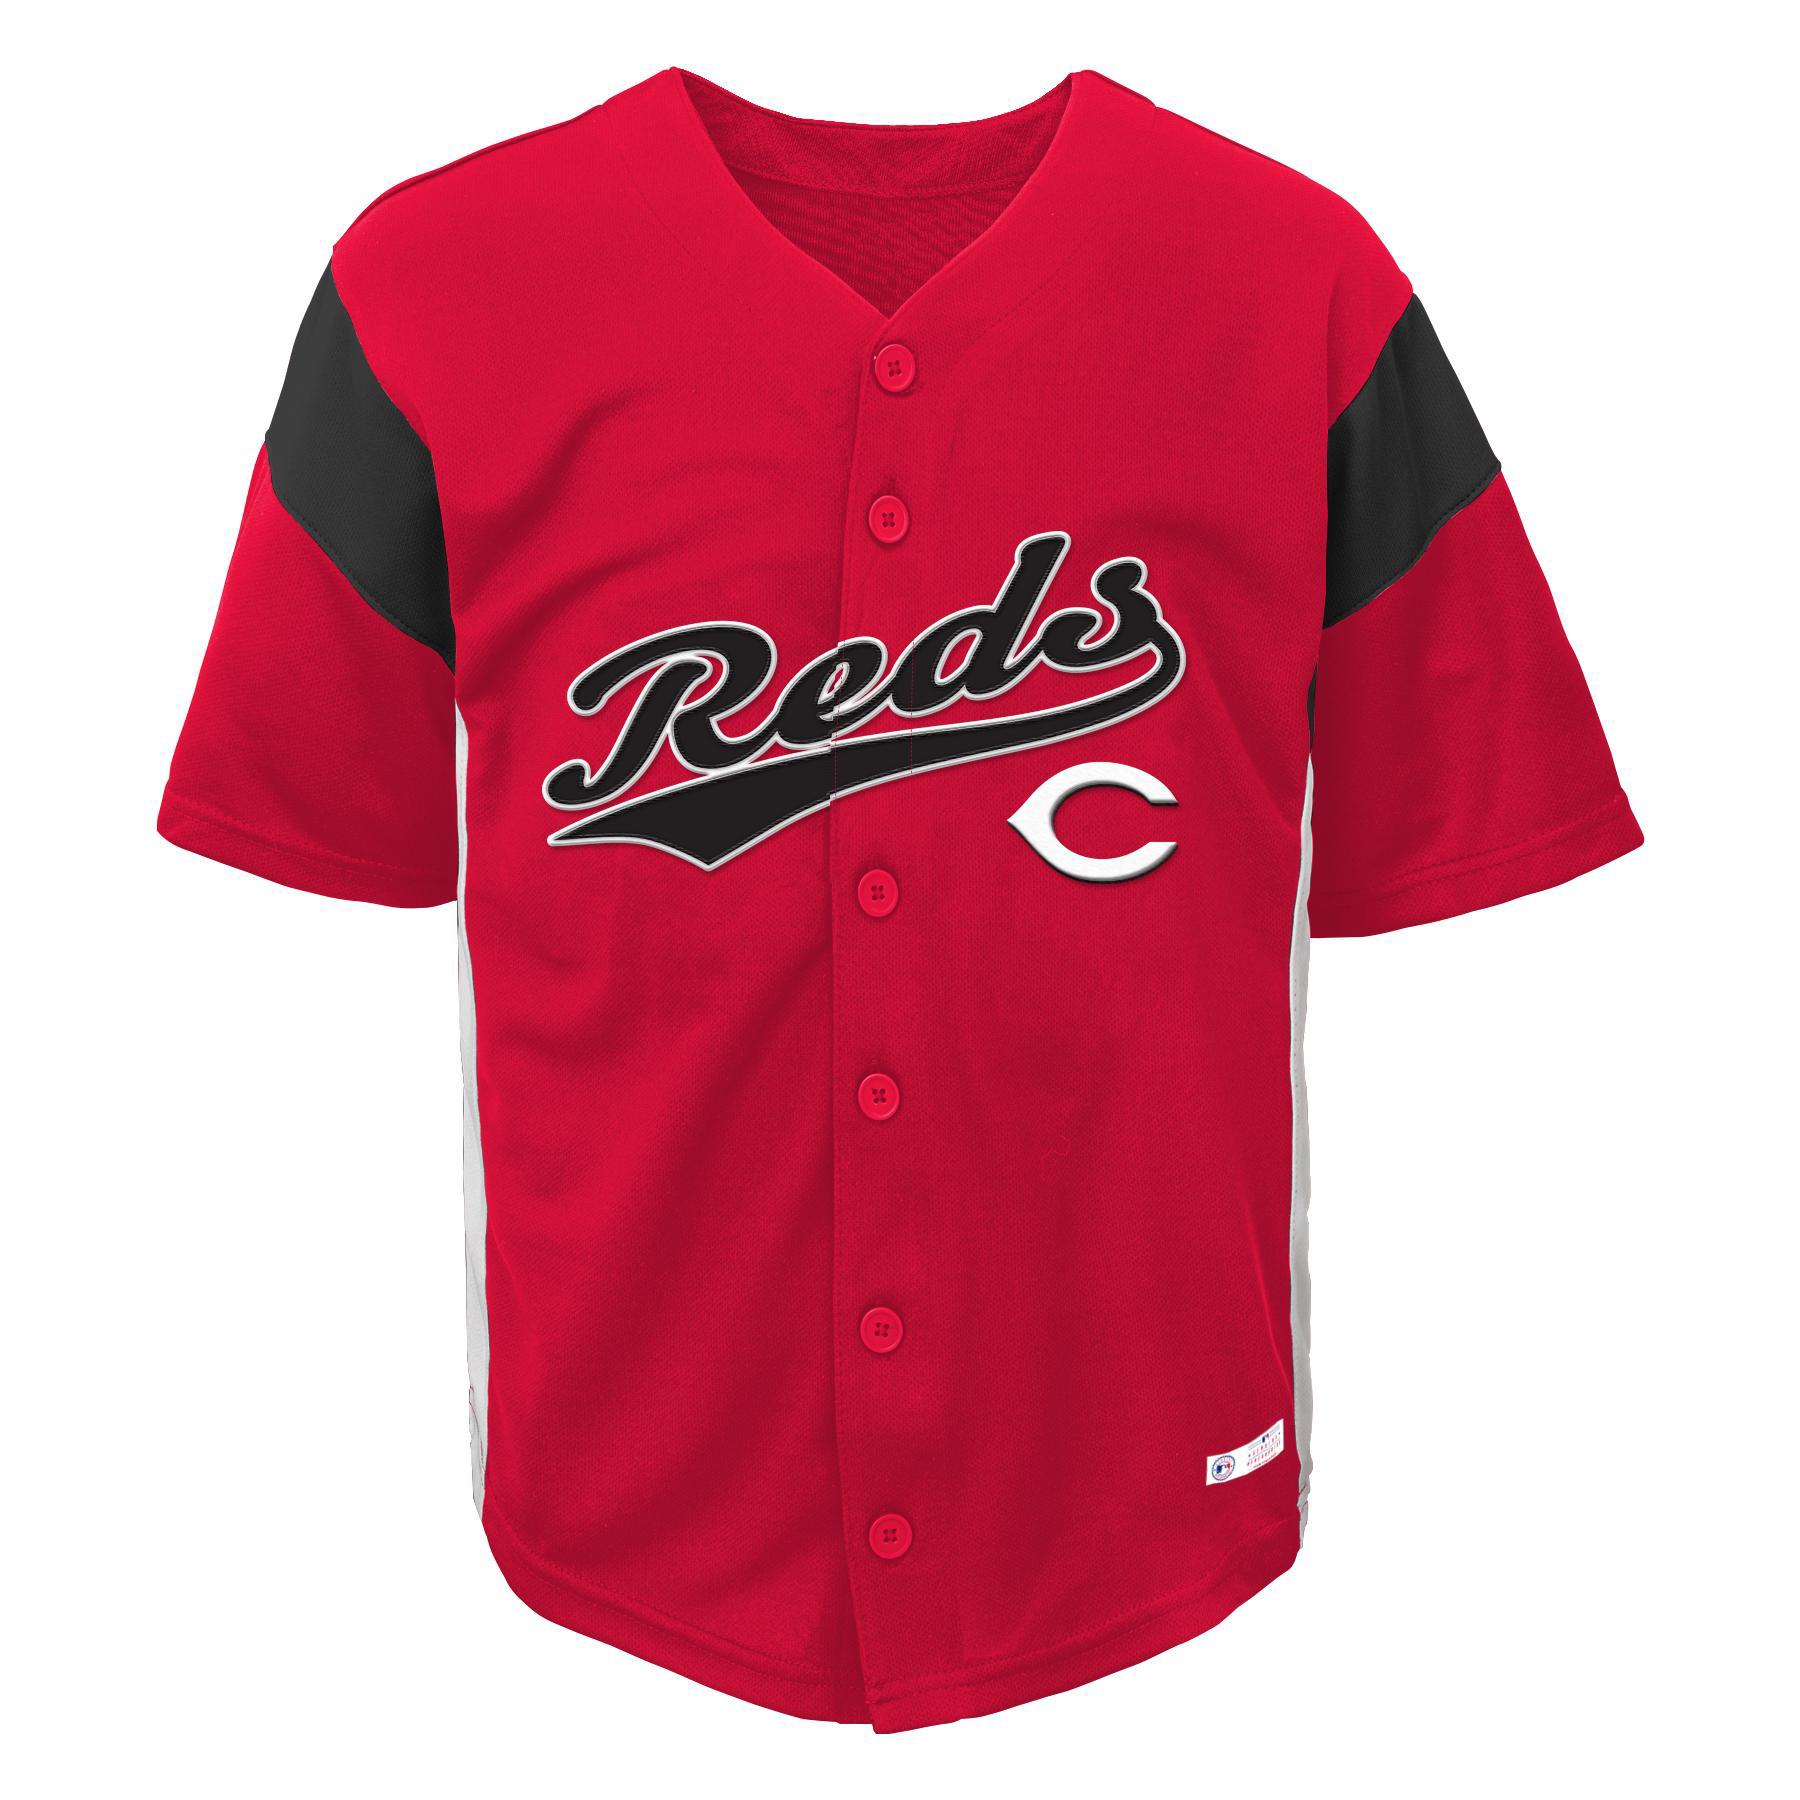 MLB Boy's Baseball Jersey - Cincinnati Reds